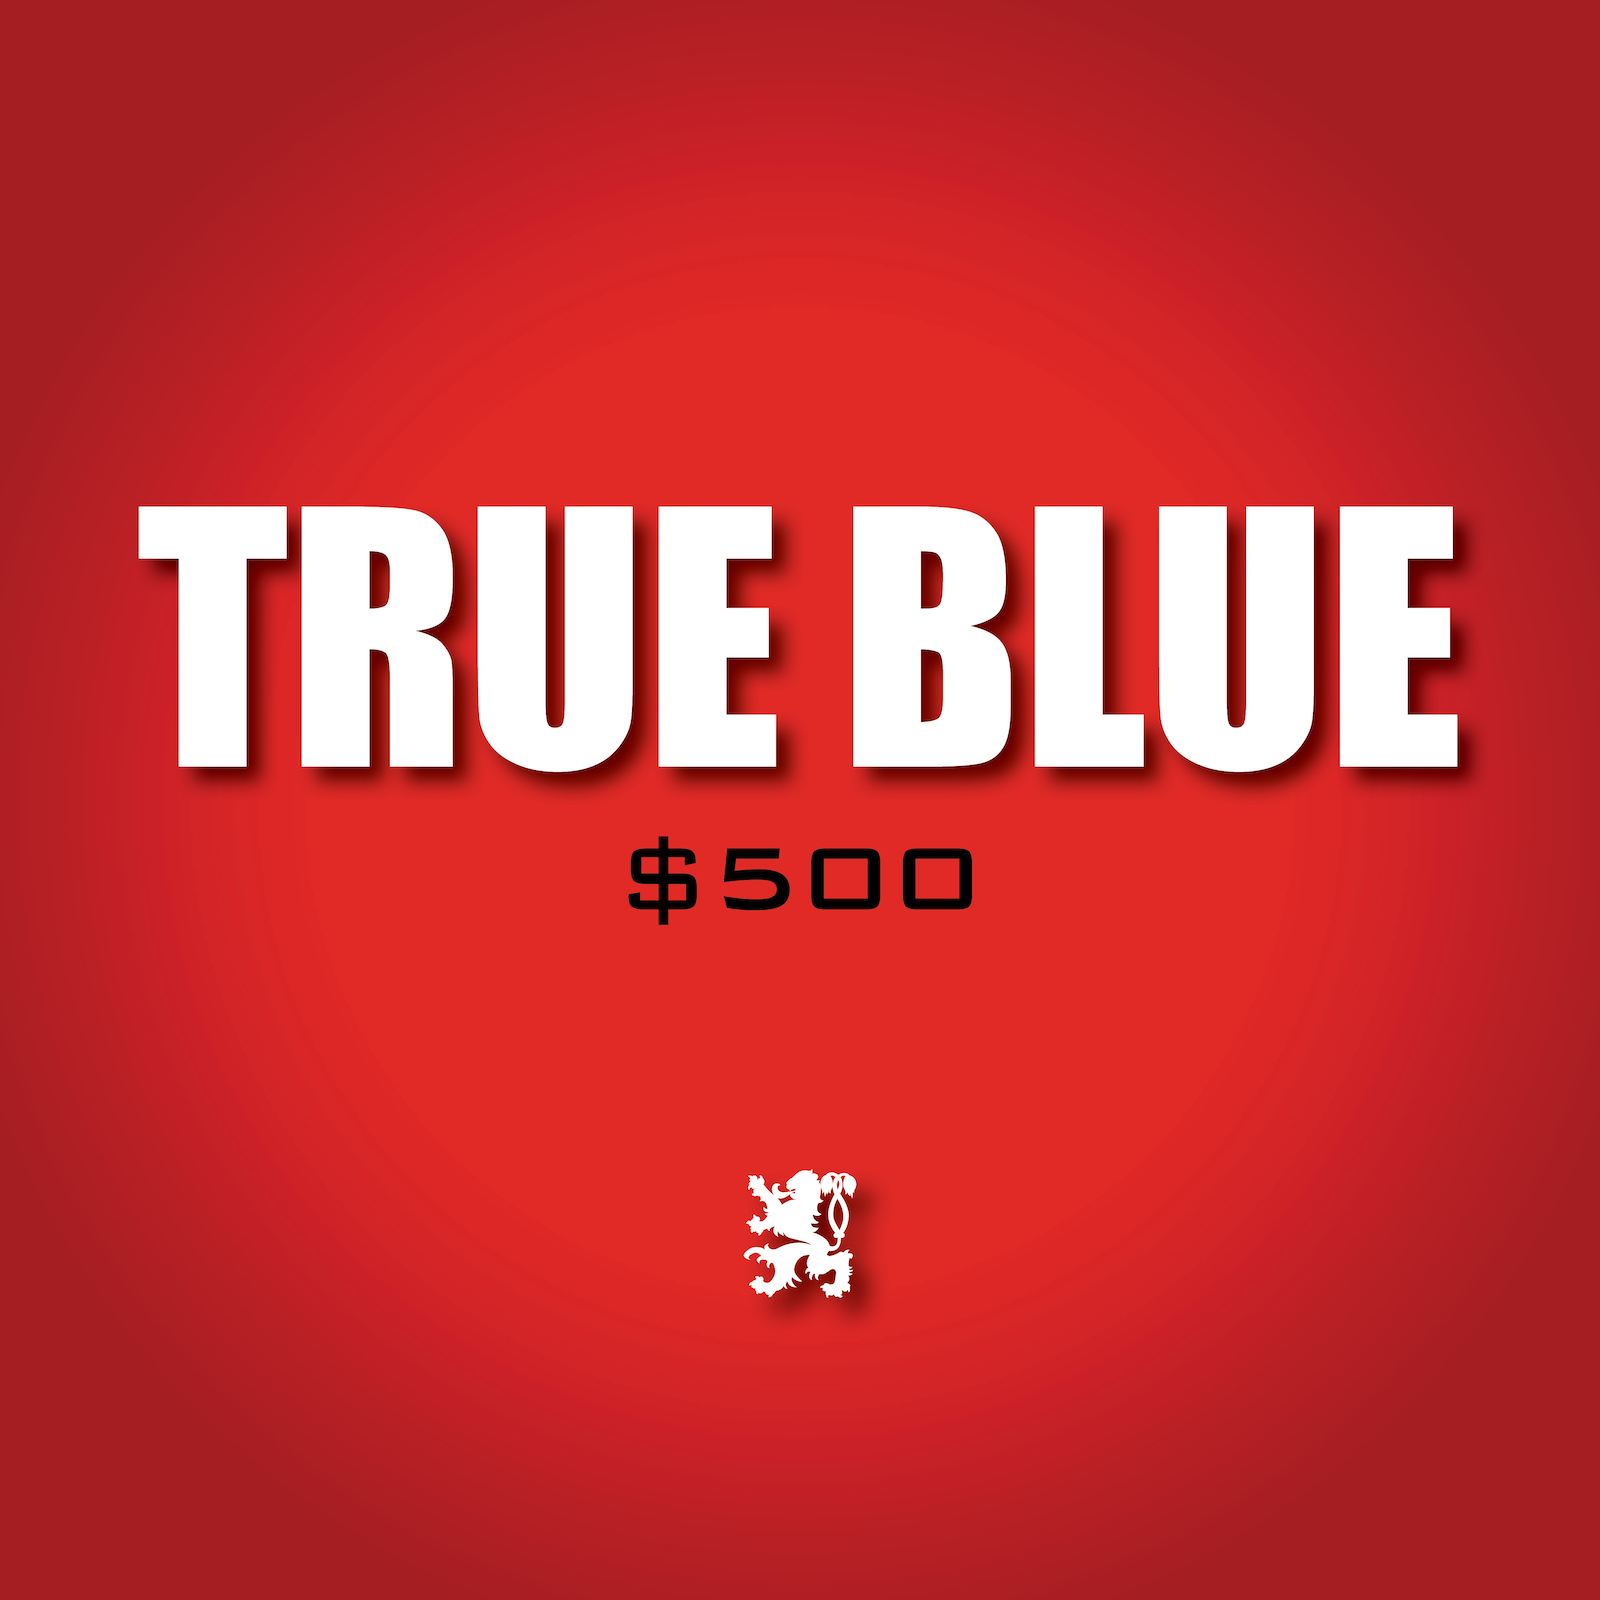 True Blue - $500